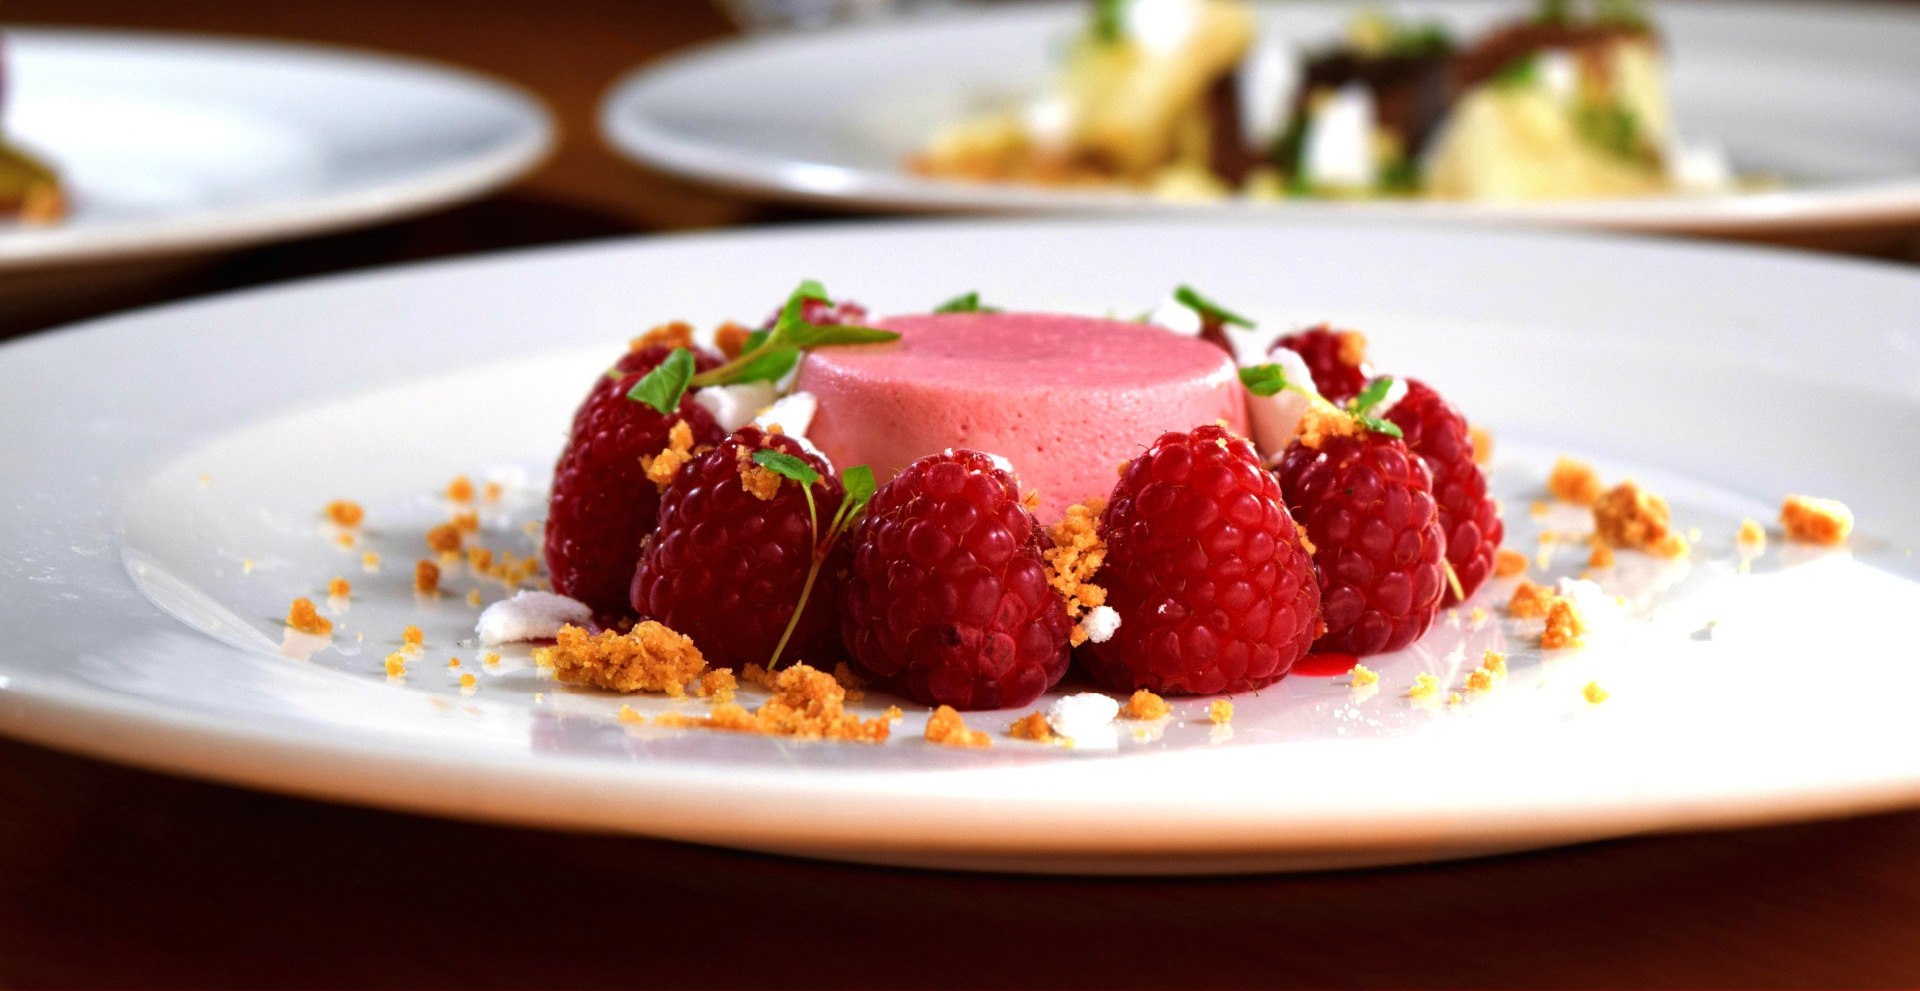 Raspberry panna cotta dessert